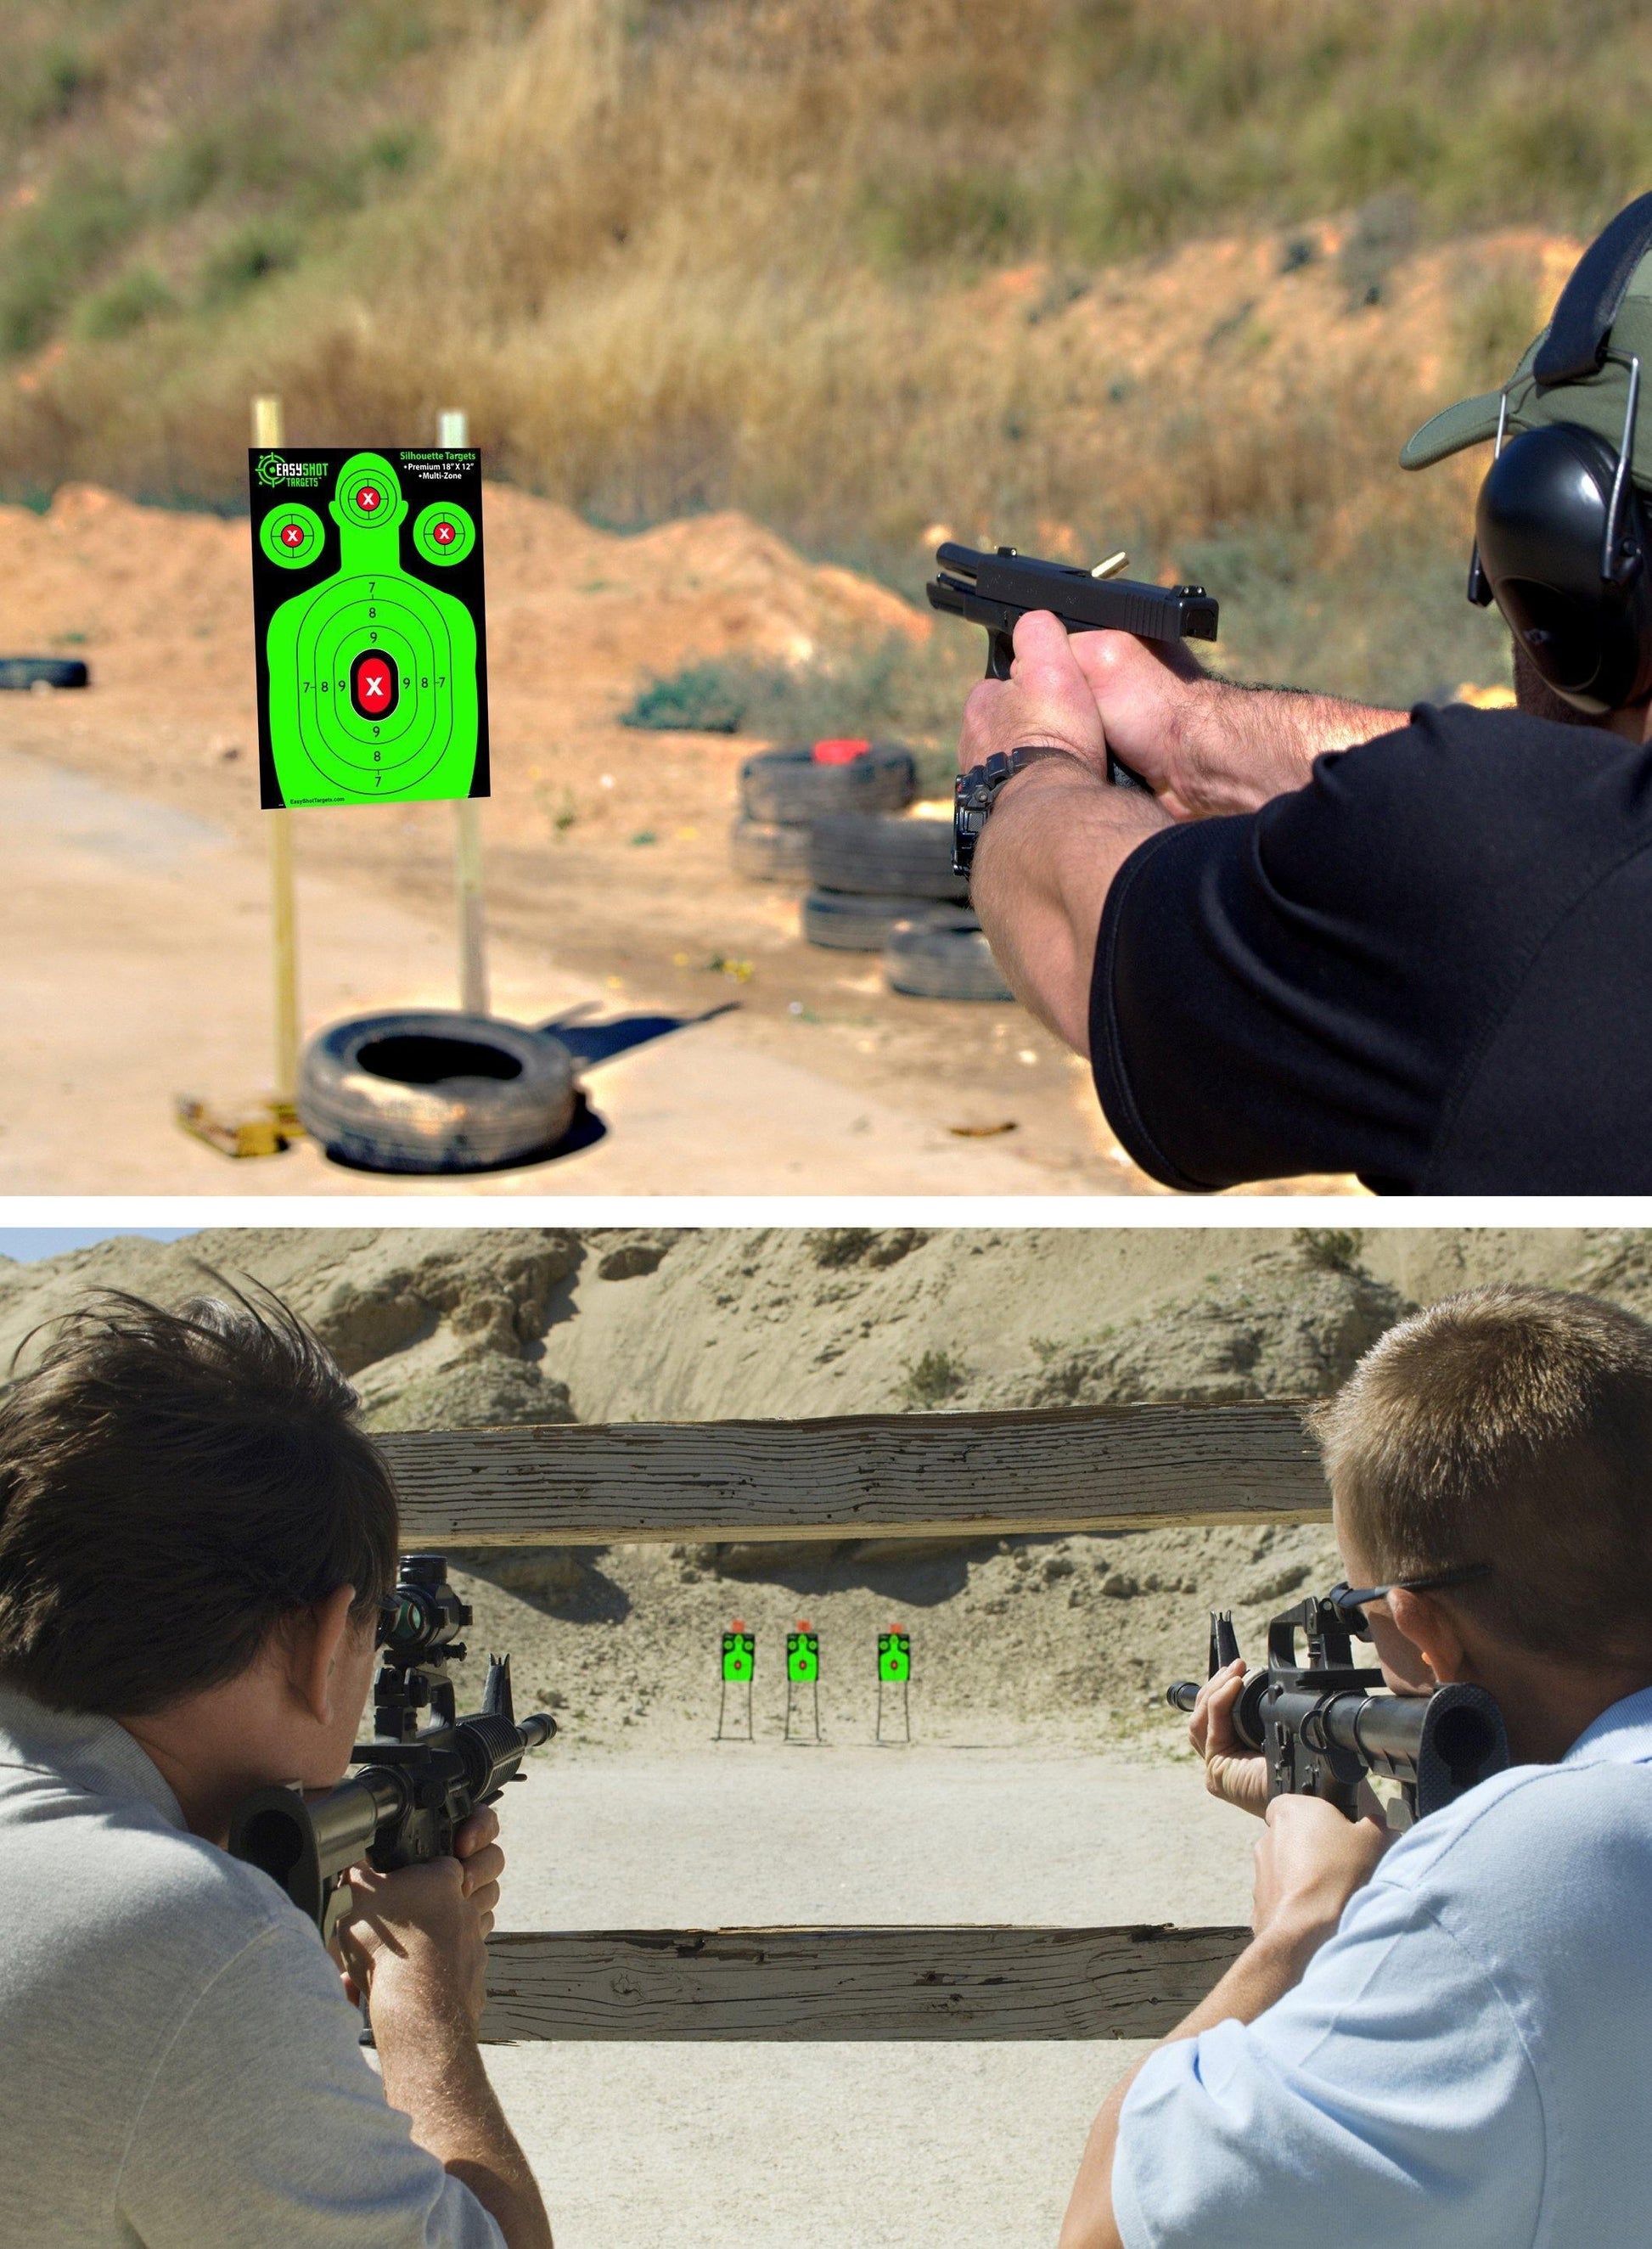 100 Pack - Neon Green - Silhouette Targets - EasyShot Targets